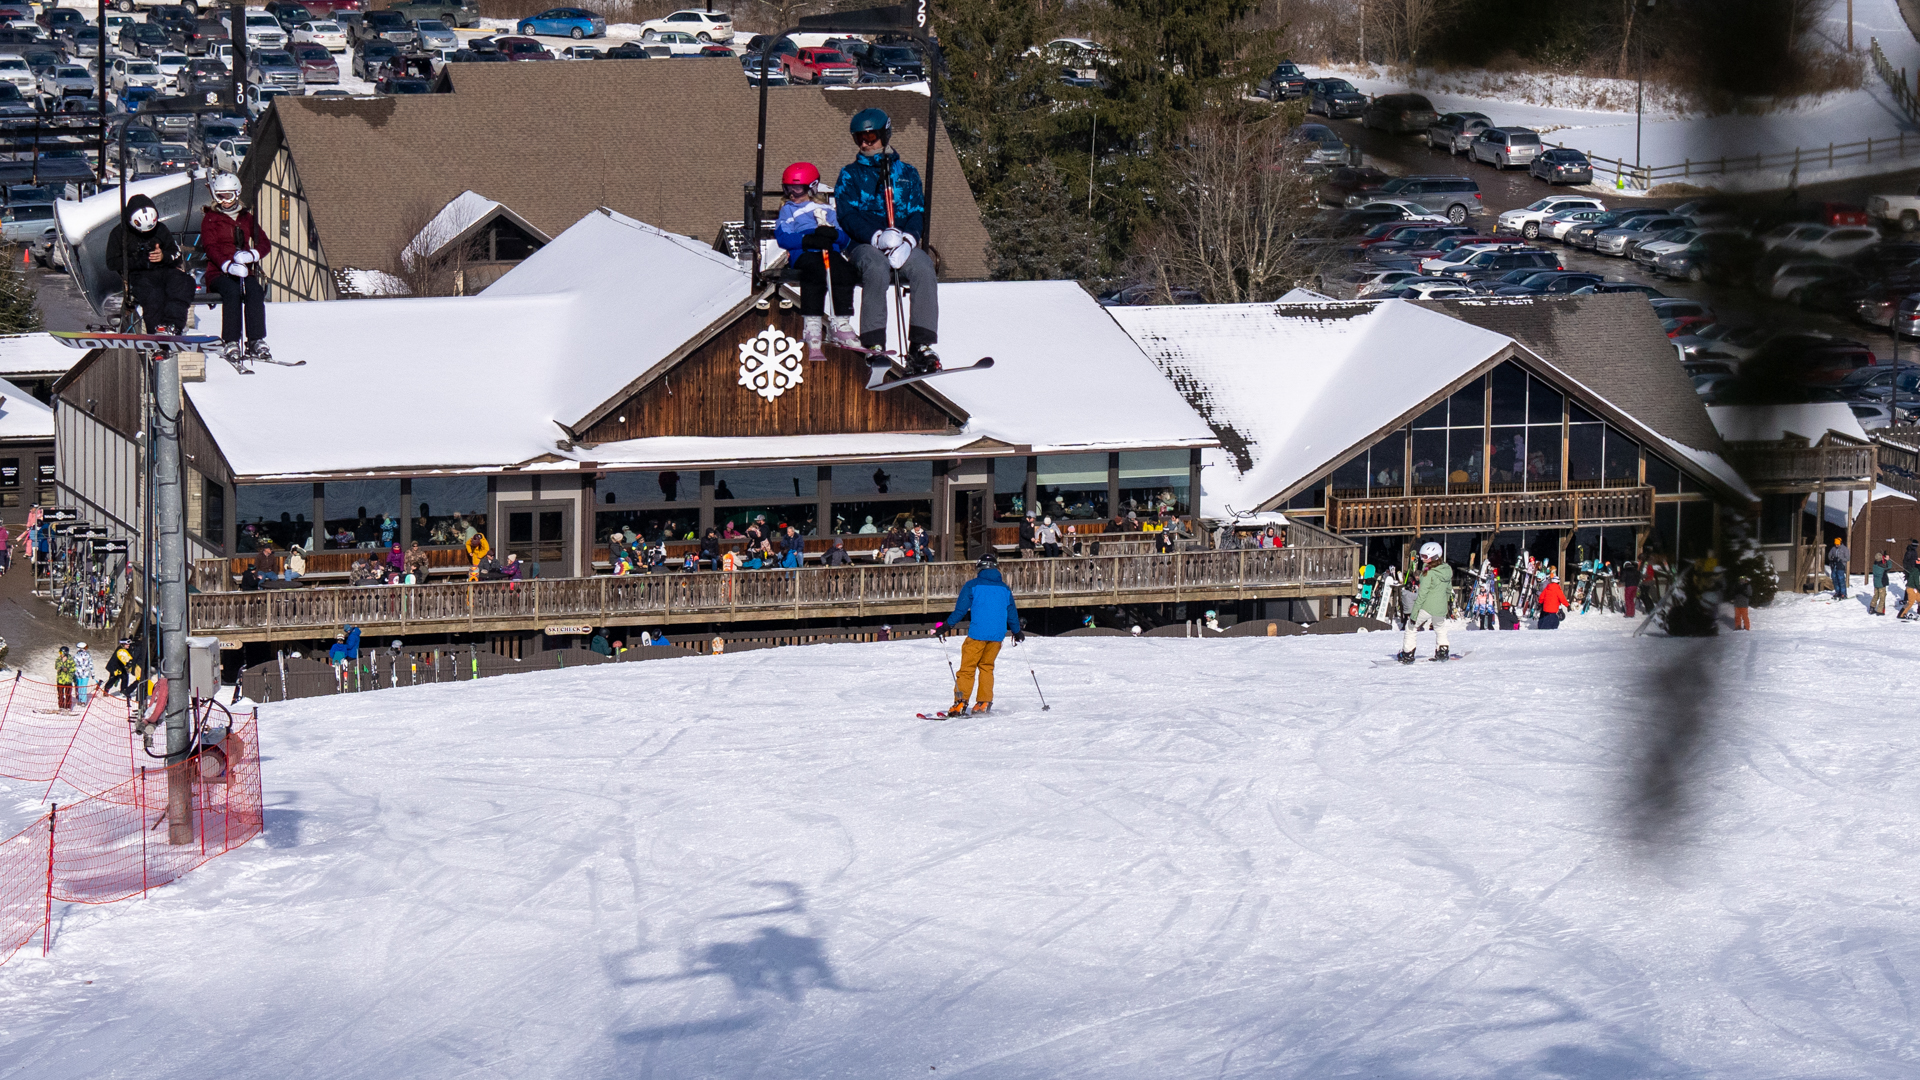 https://www.snowtrails.com/upload/skiing/blog/ski-lodge_snow-trails_ohio-01298.jpg